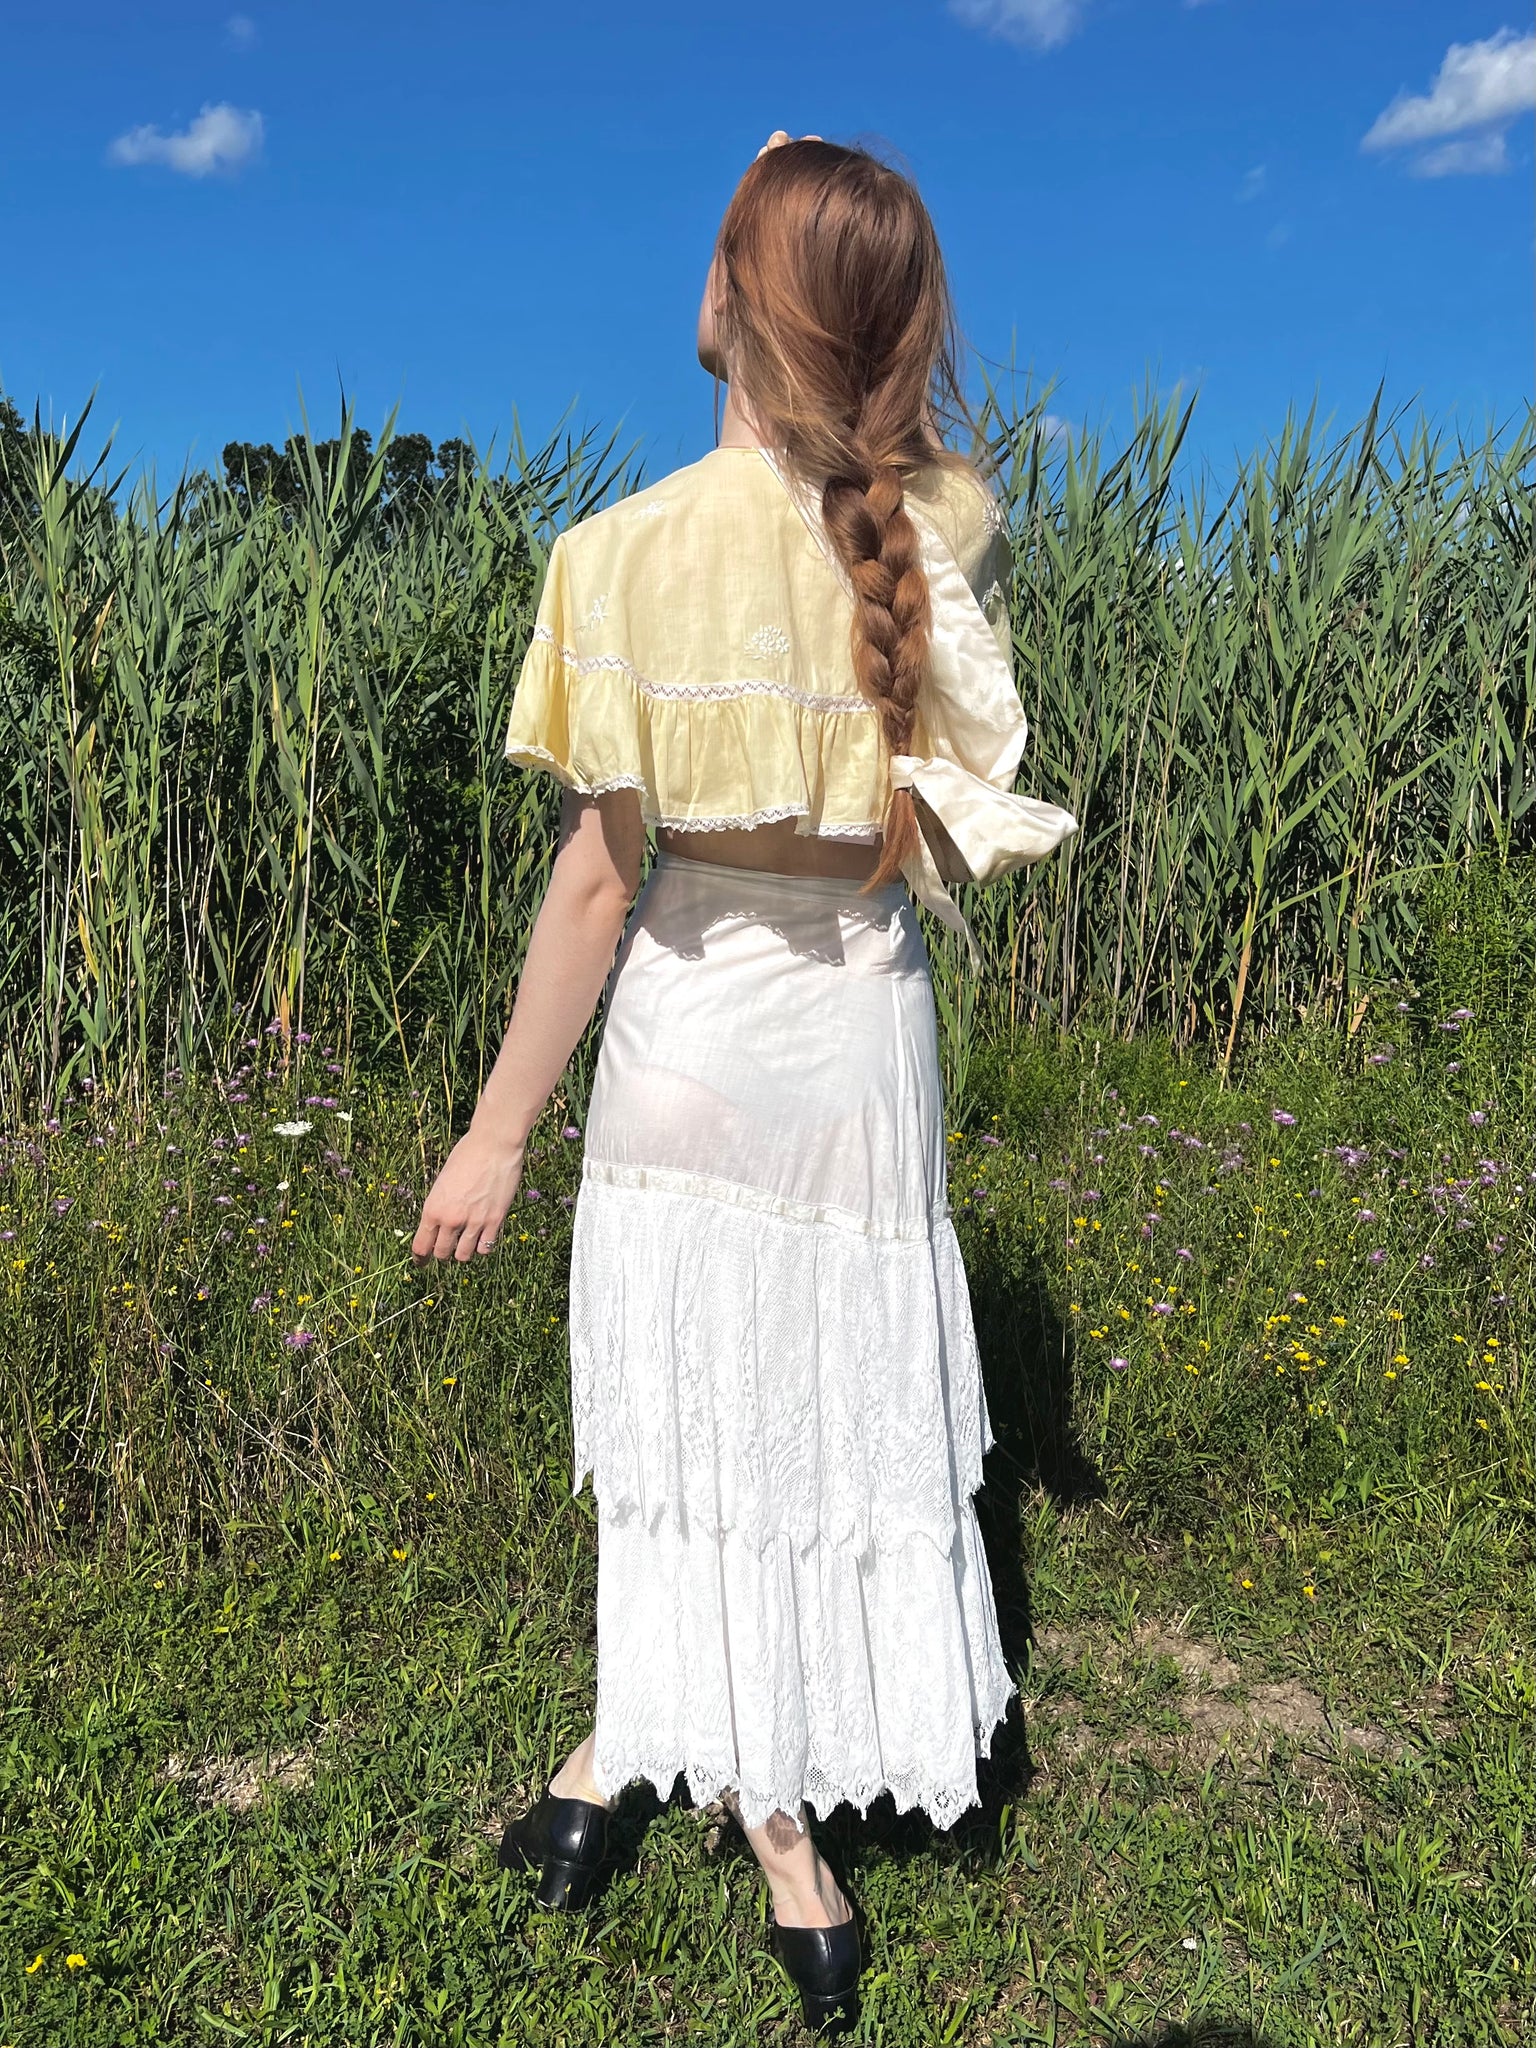 1910s Floral Lace White Cotton Skirt Petticoat Original Ribbon